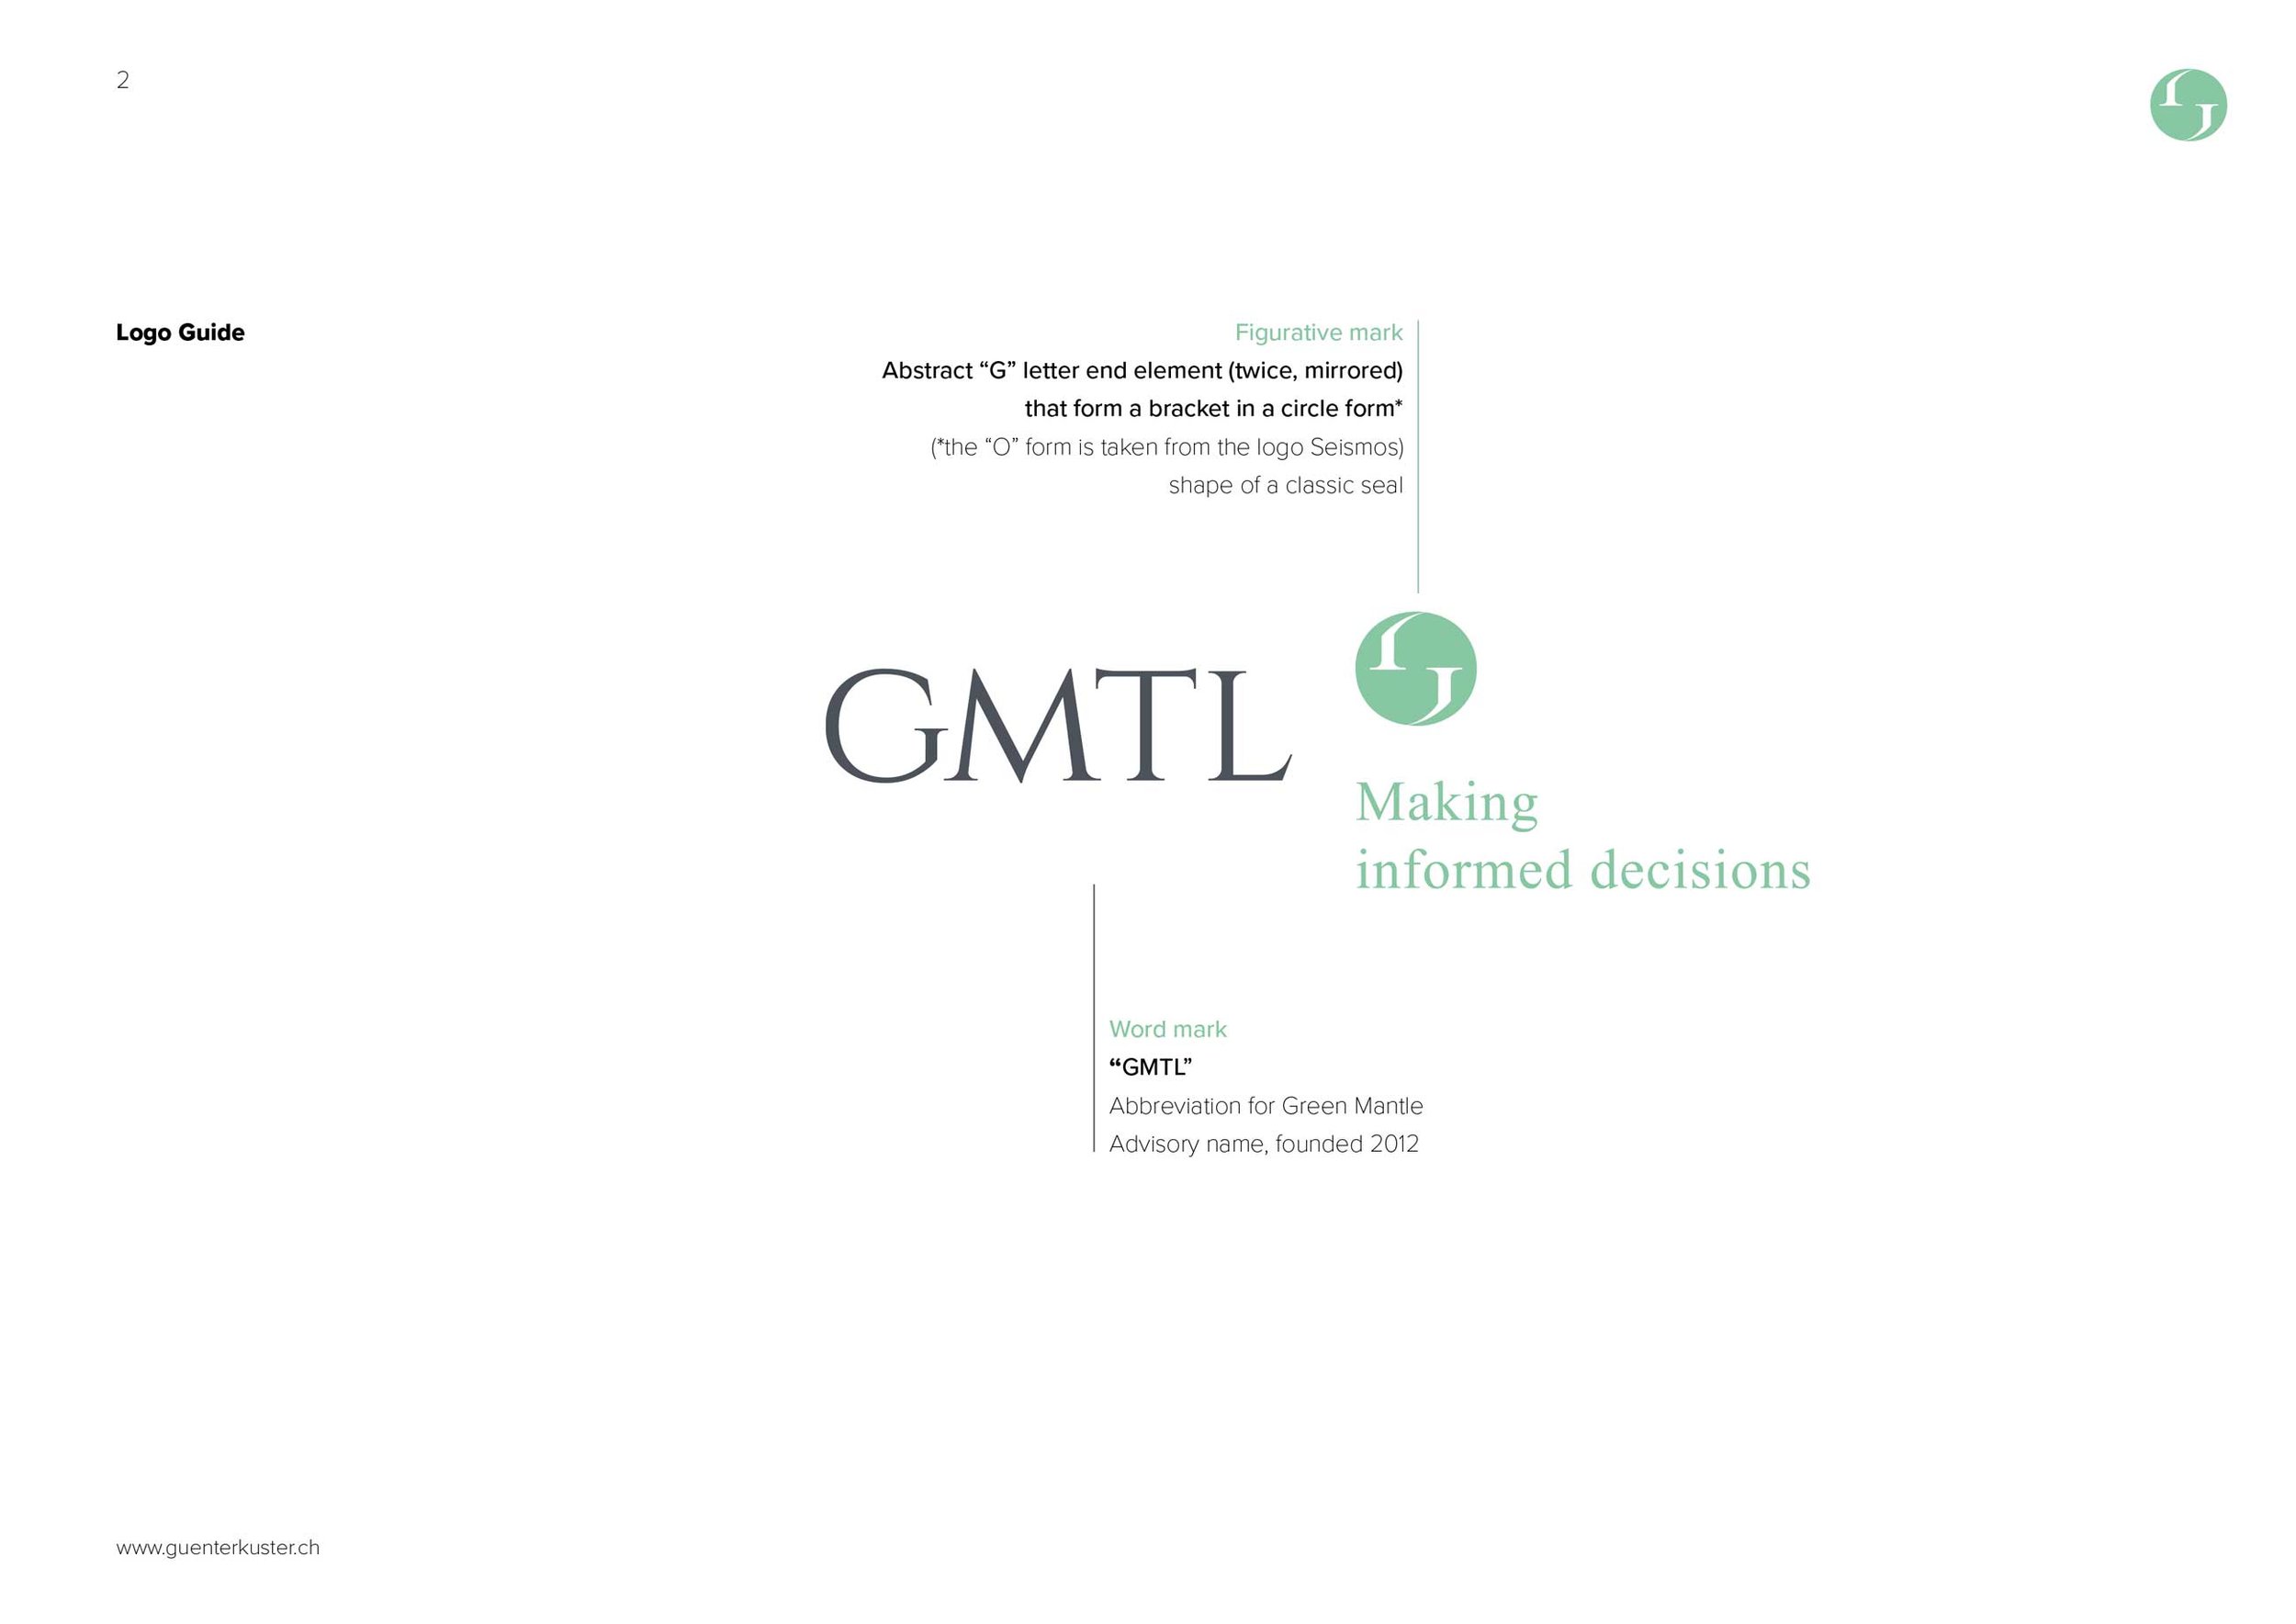 GMTL_logo_guide_page01.jpg